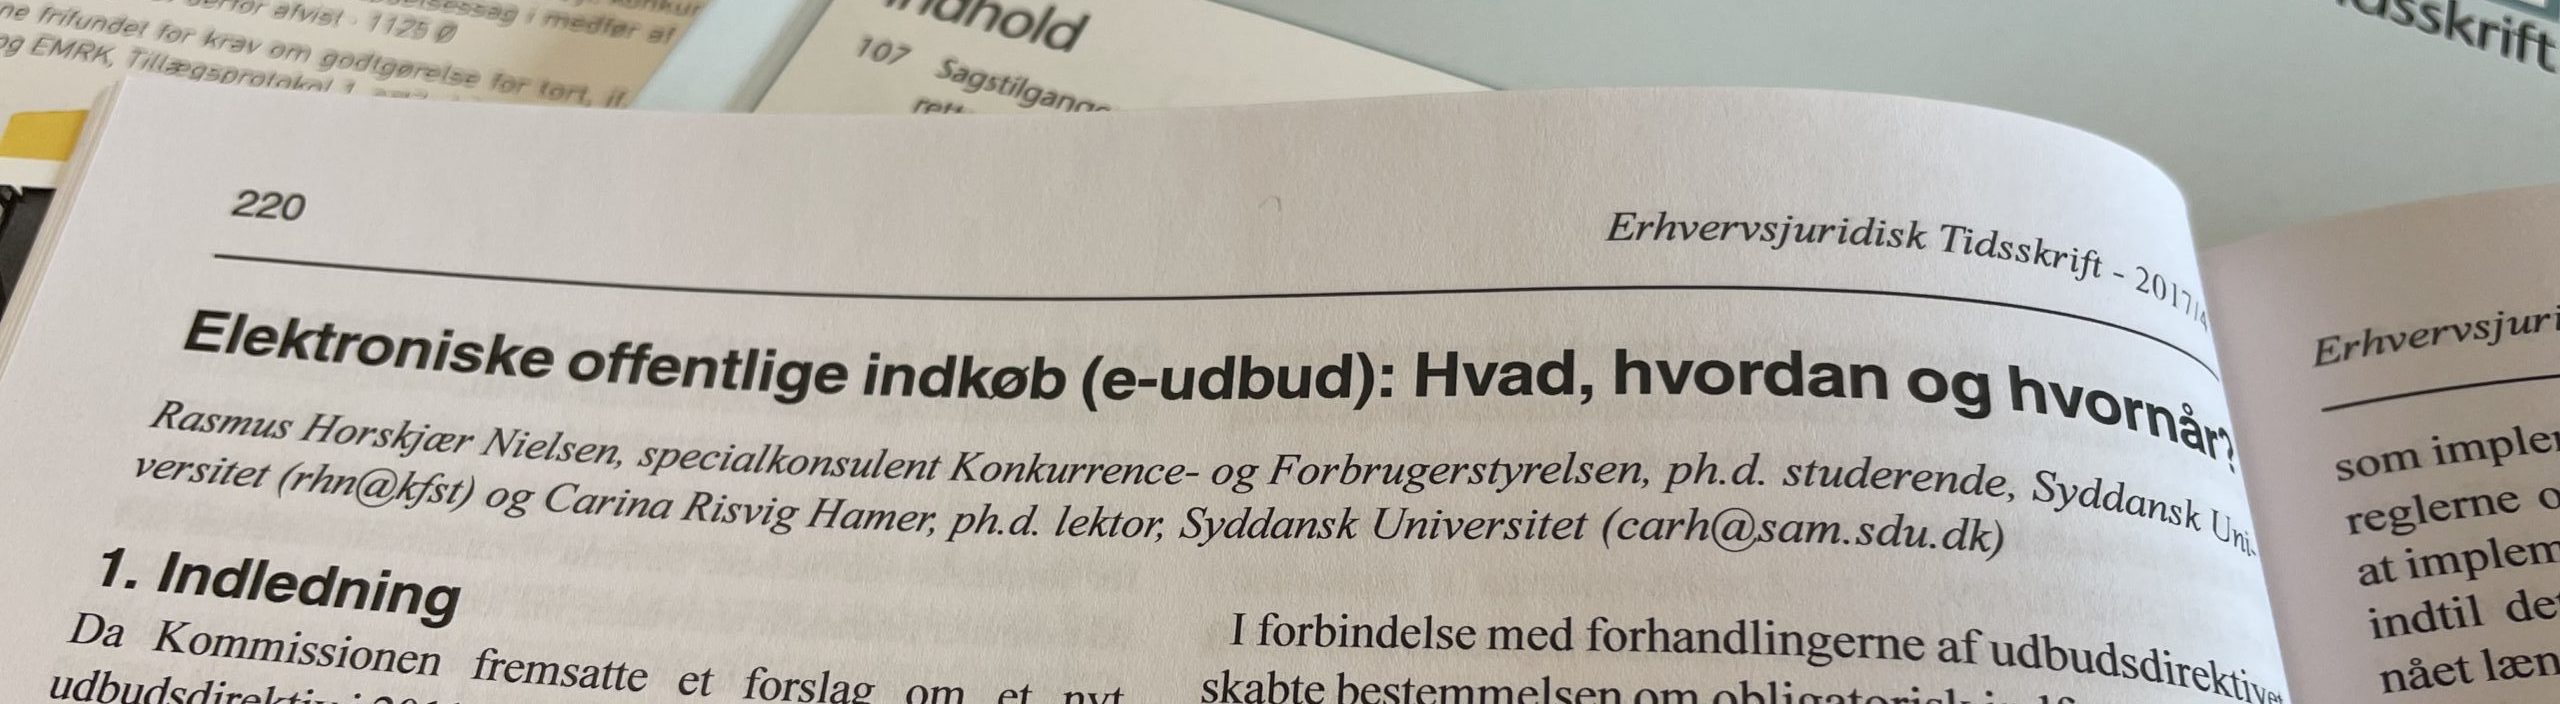 Udbudslov.dk